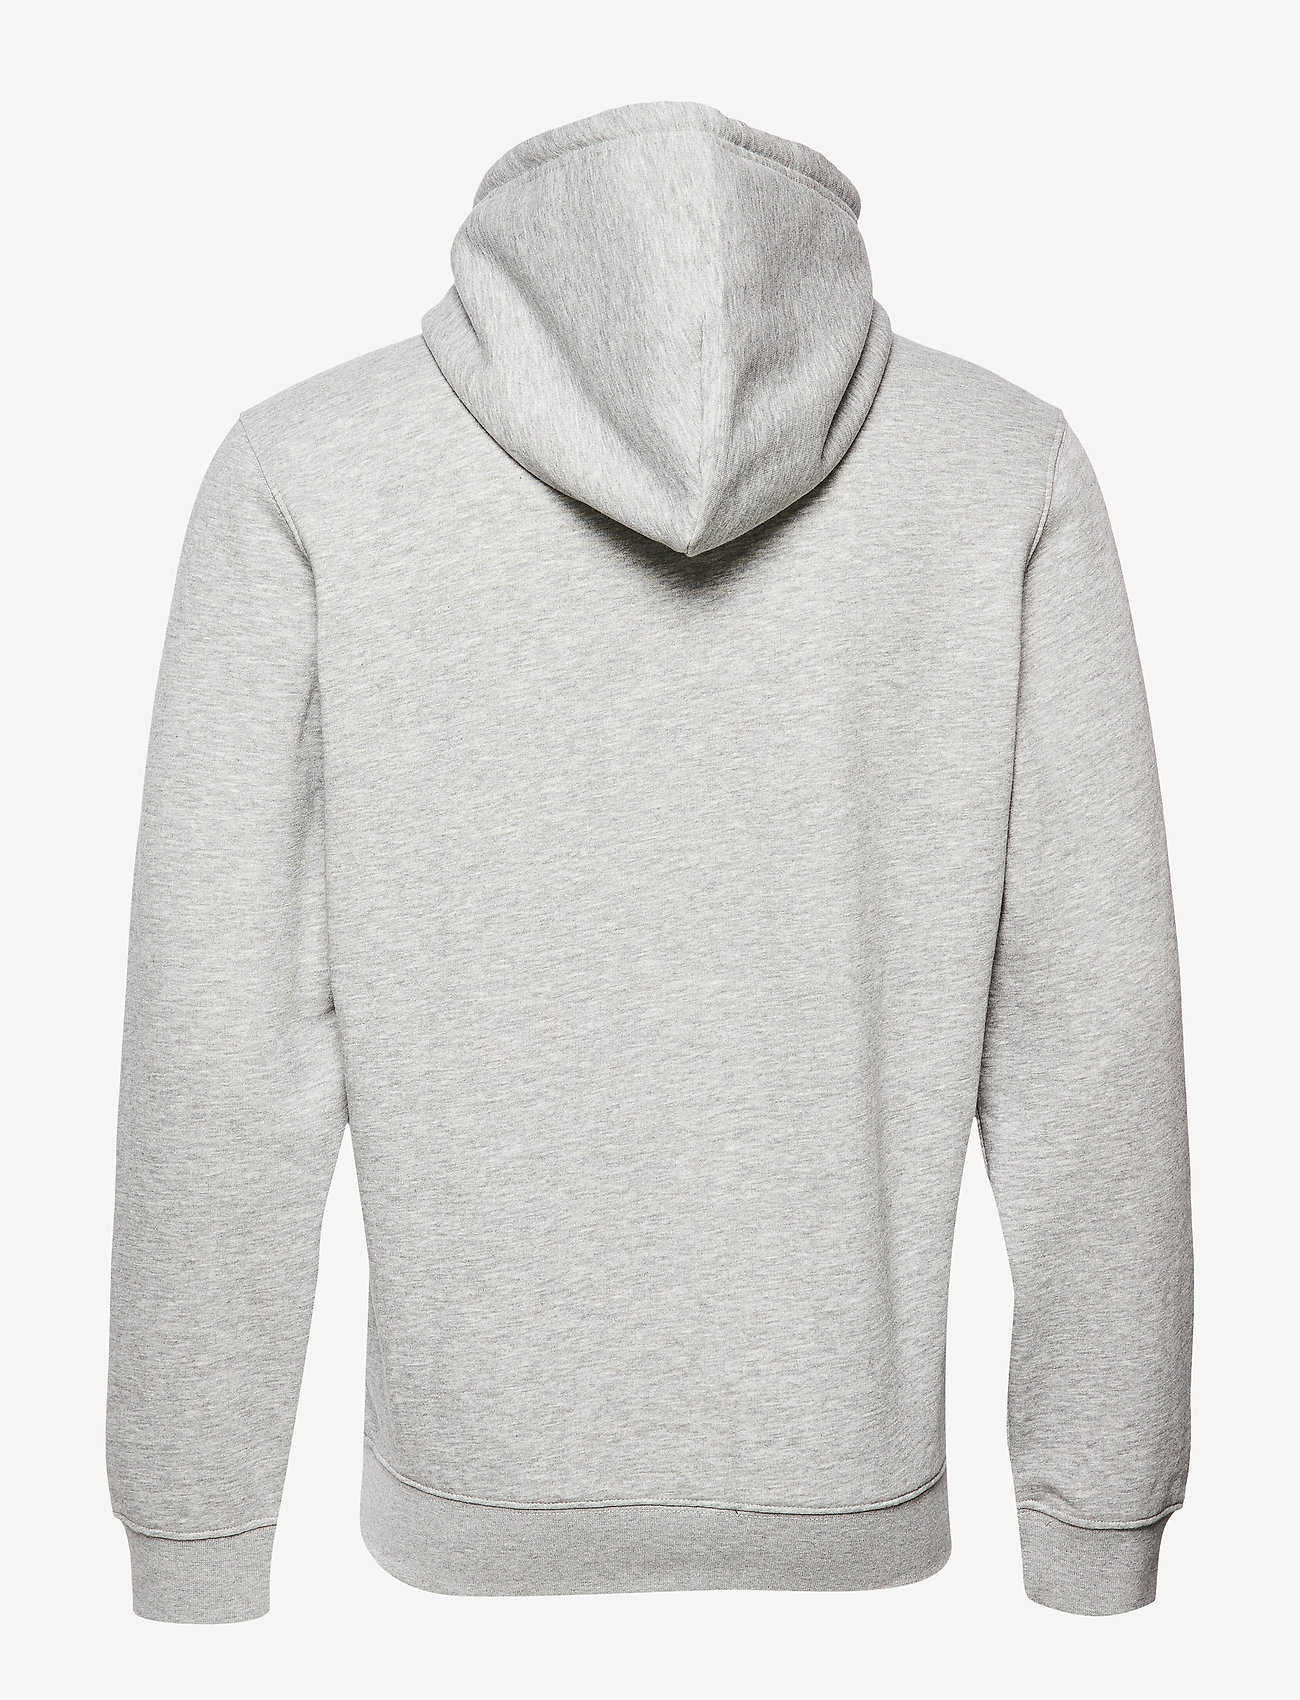 Download Hooded Full Zip Sweatshirt (Gray Melange Light) (360 kr ...